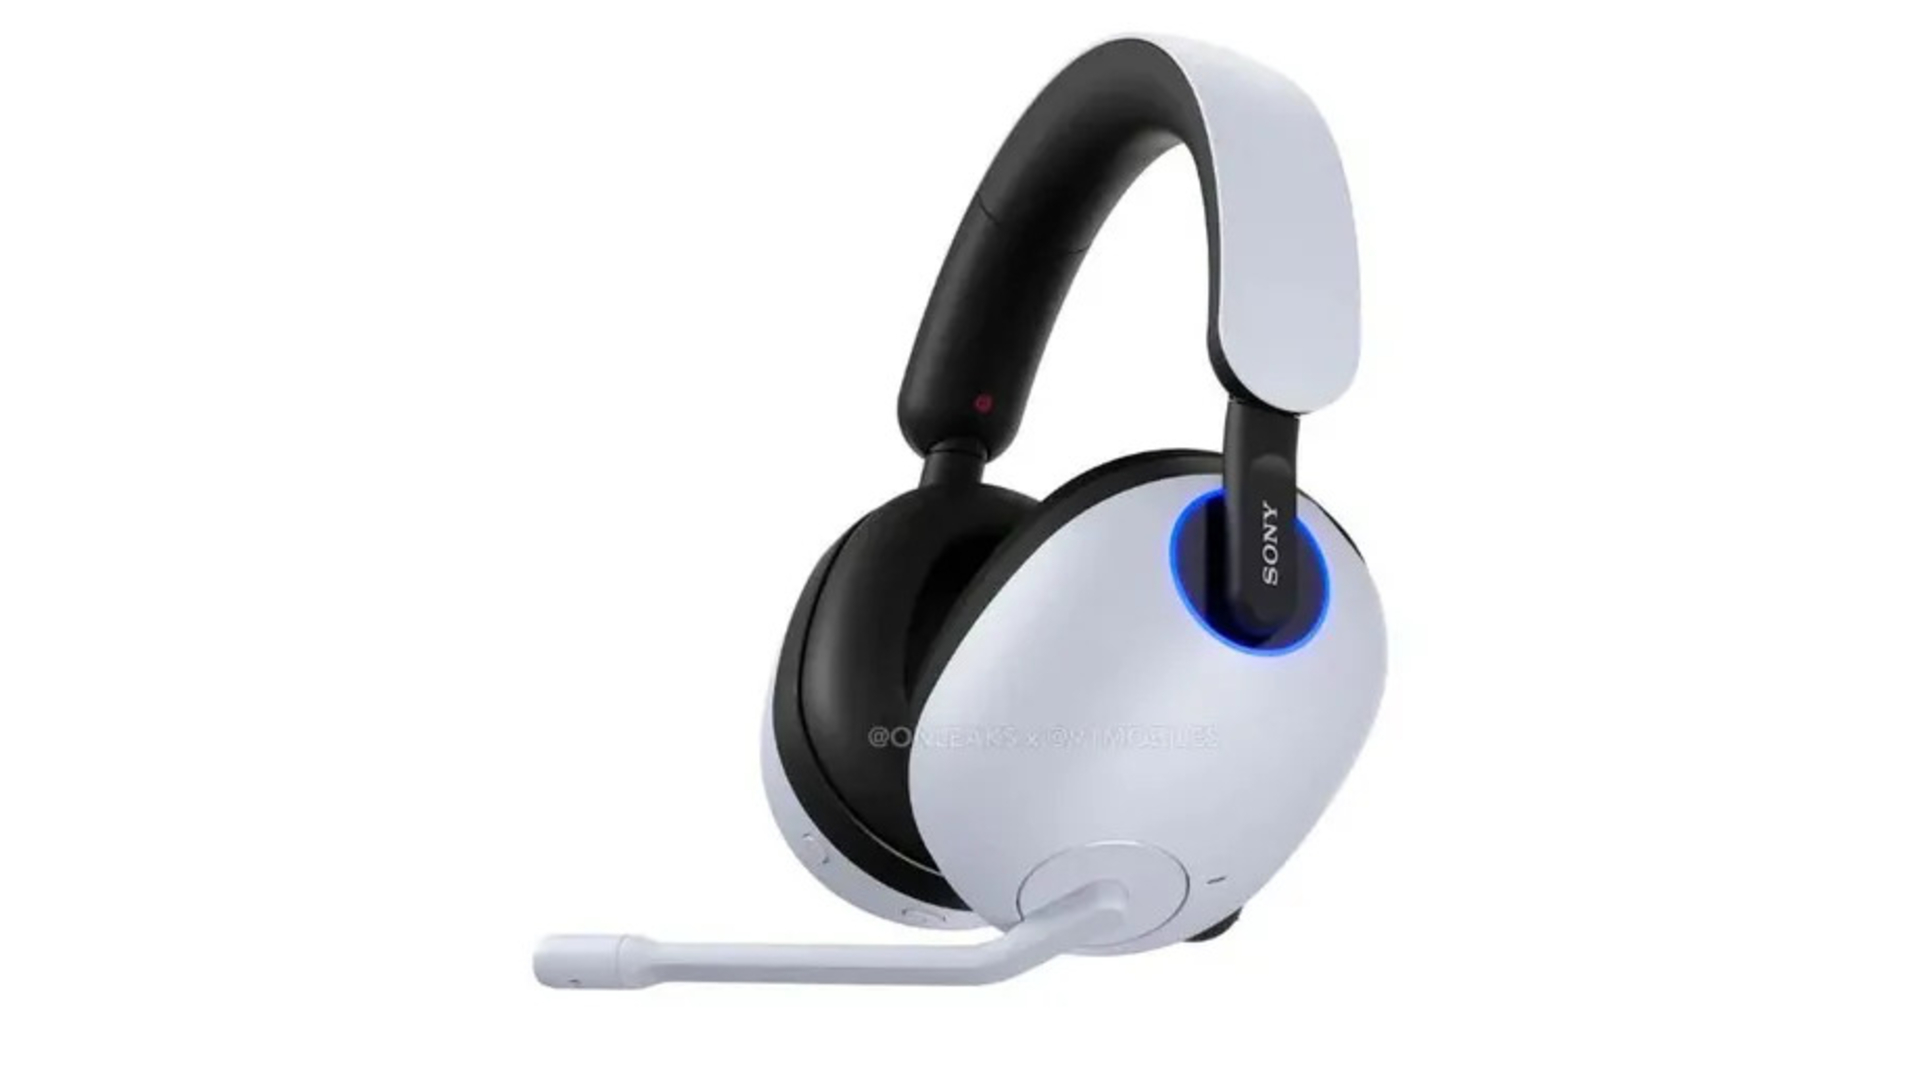 Sony Inzone H9 produkt shot. Wite bedrade headset op wite eftergrûn